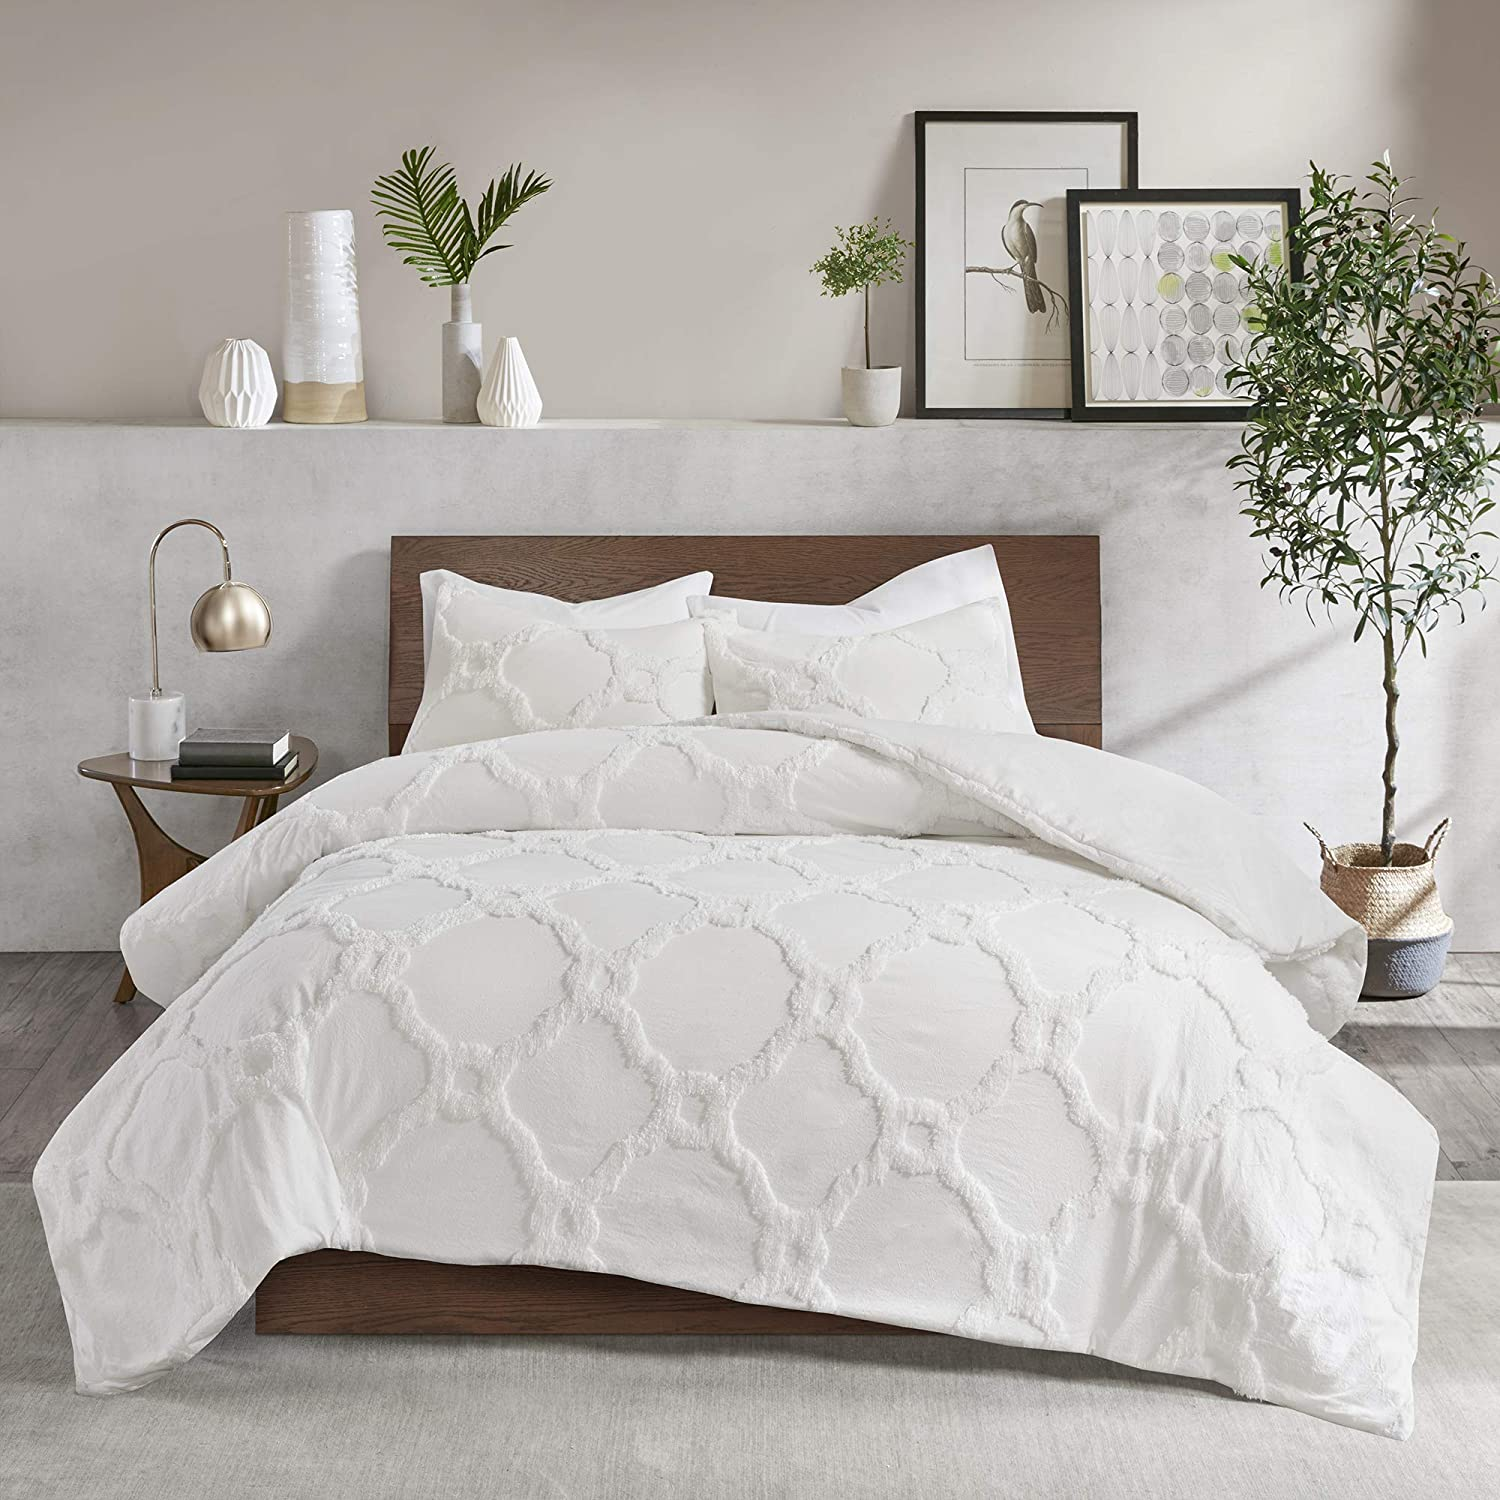 Tufted sleigh bed comforter design 